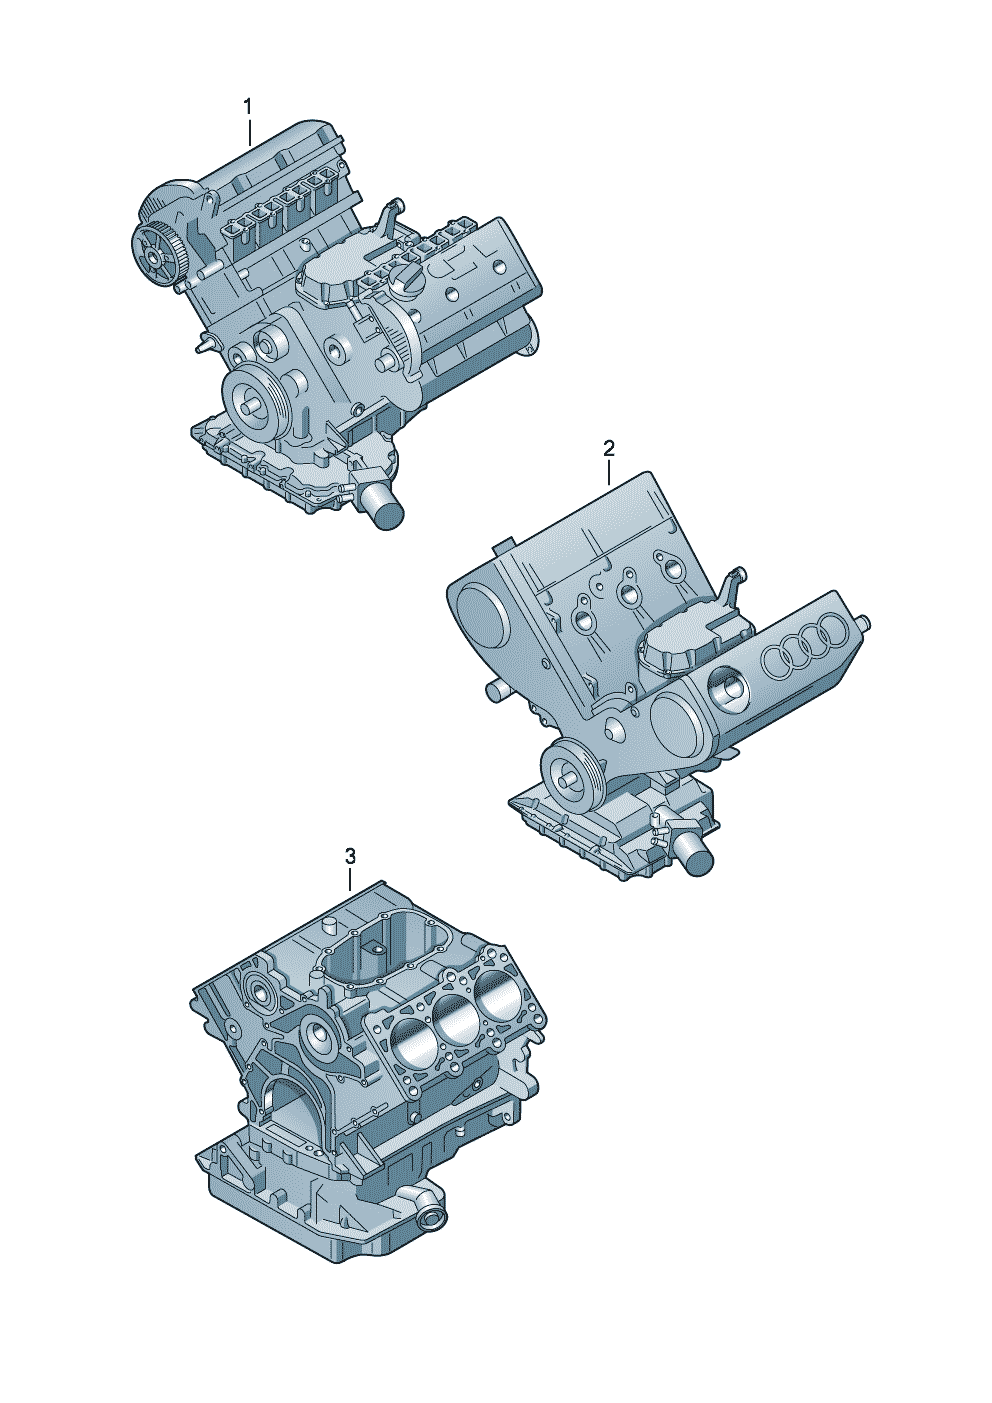 Base engine 3.0Ltr. - Audi A6/Avant - a6